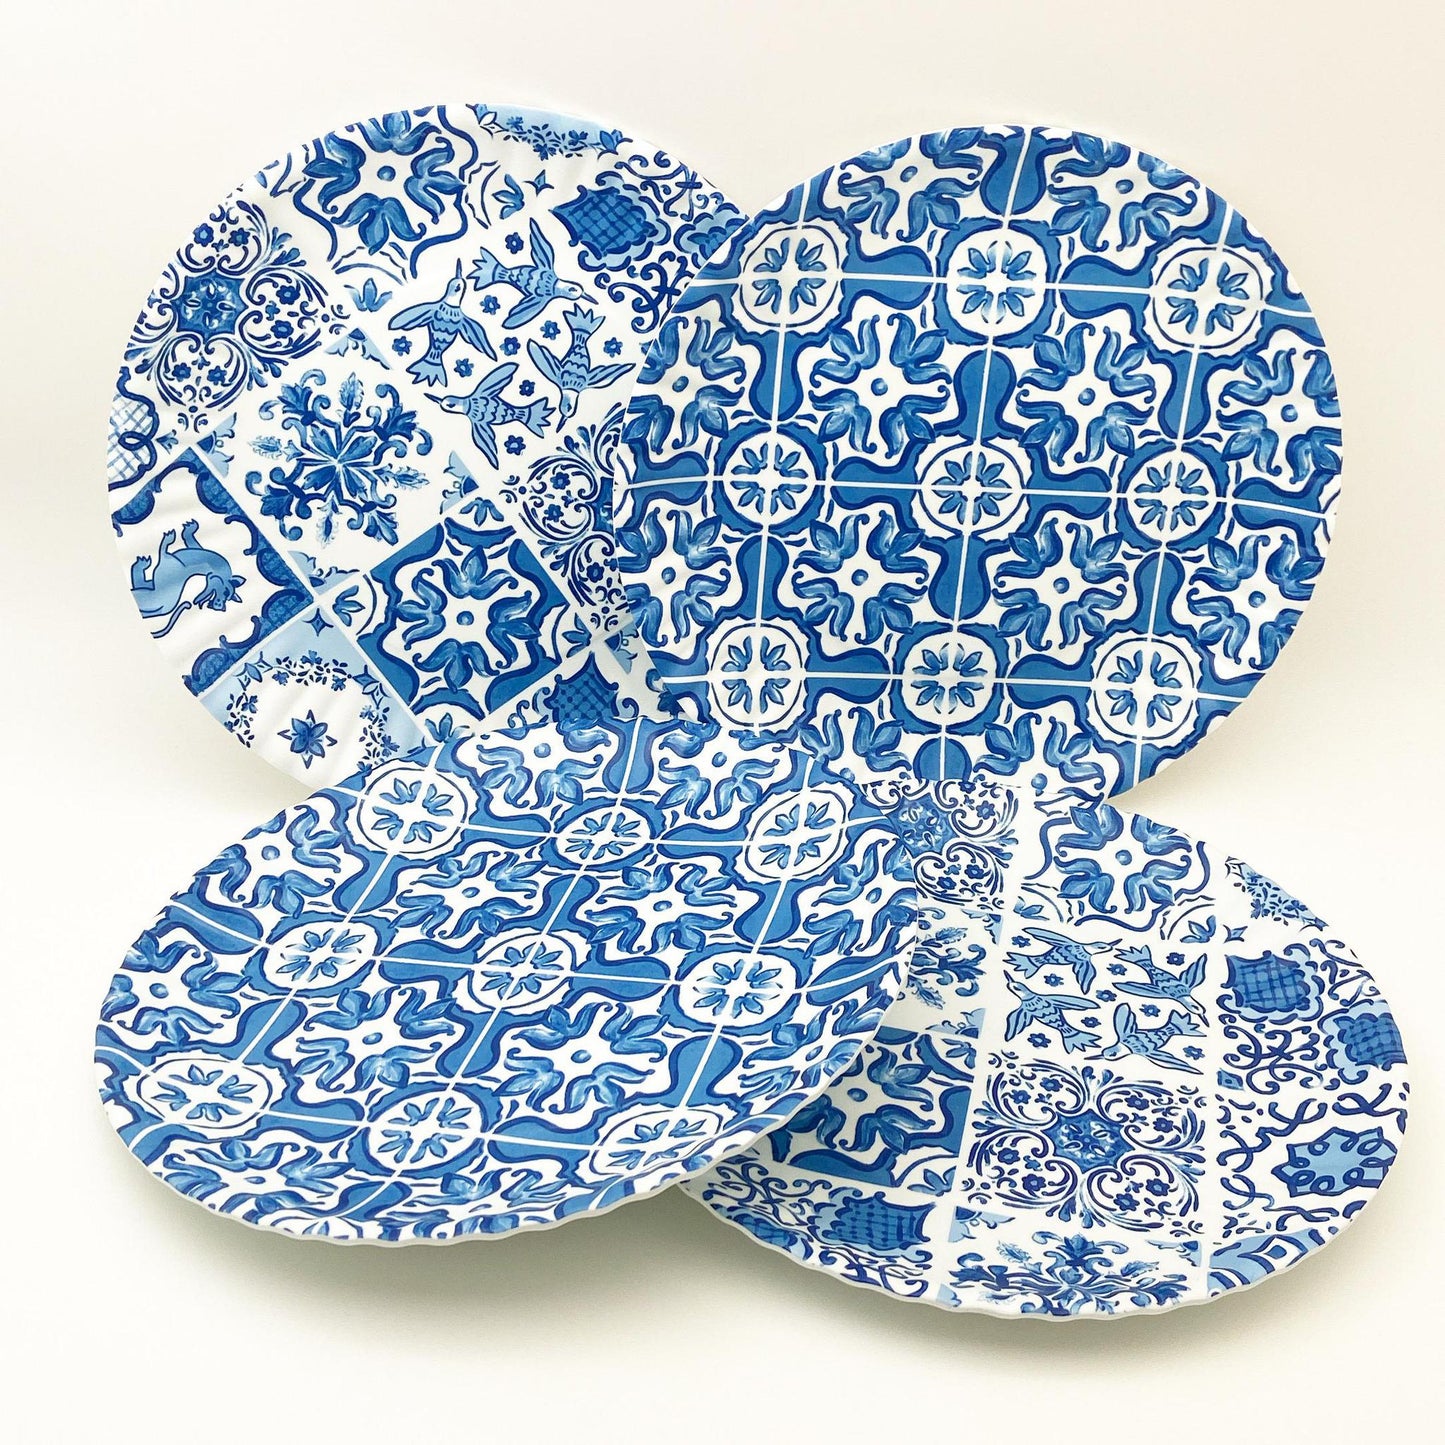 Plate - Melamine "Paper Plate" - Matching Blue Tiles